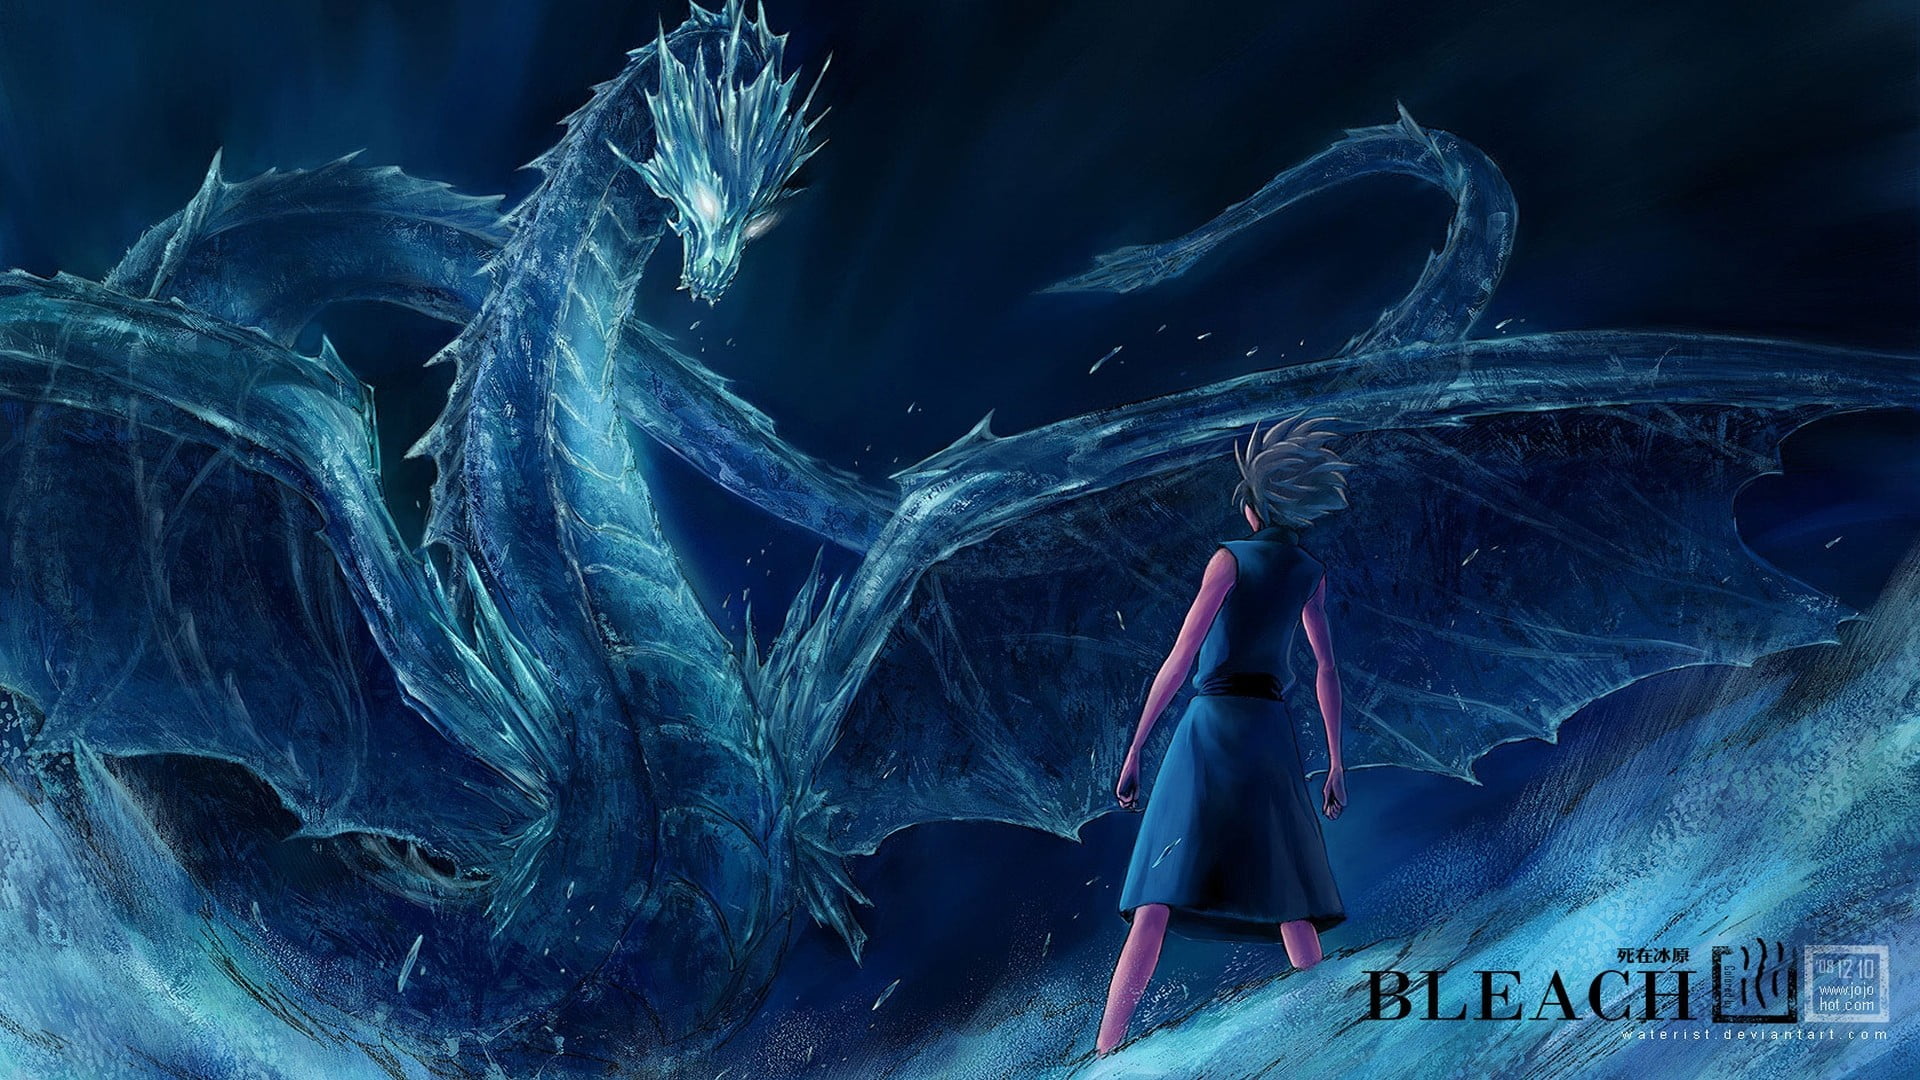 Bleach game cover, Hitsugaya Toshiro, dragon, ice, no people